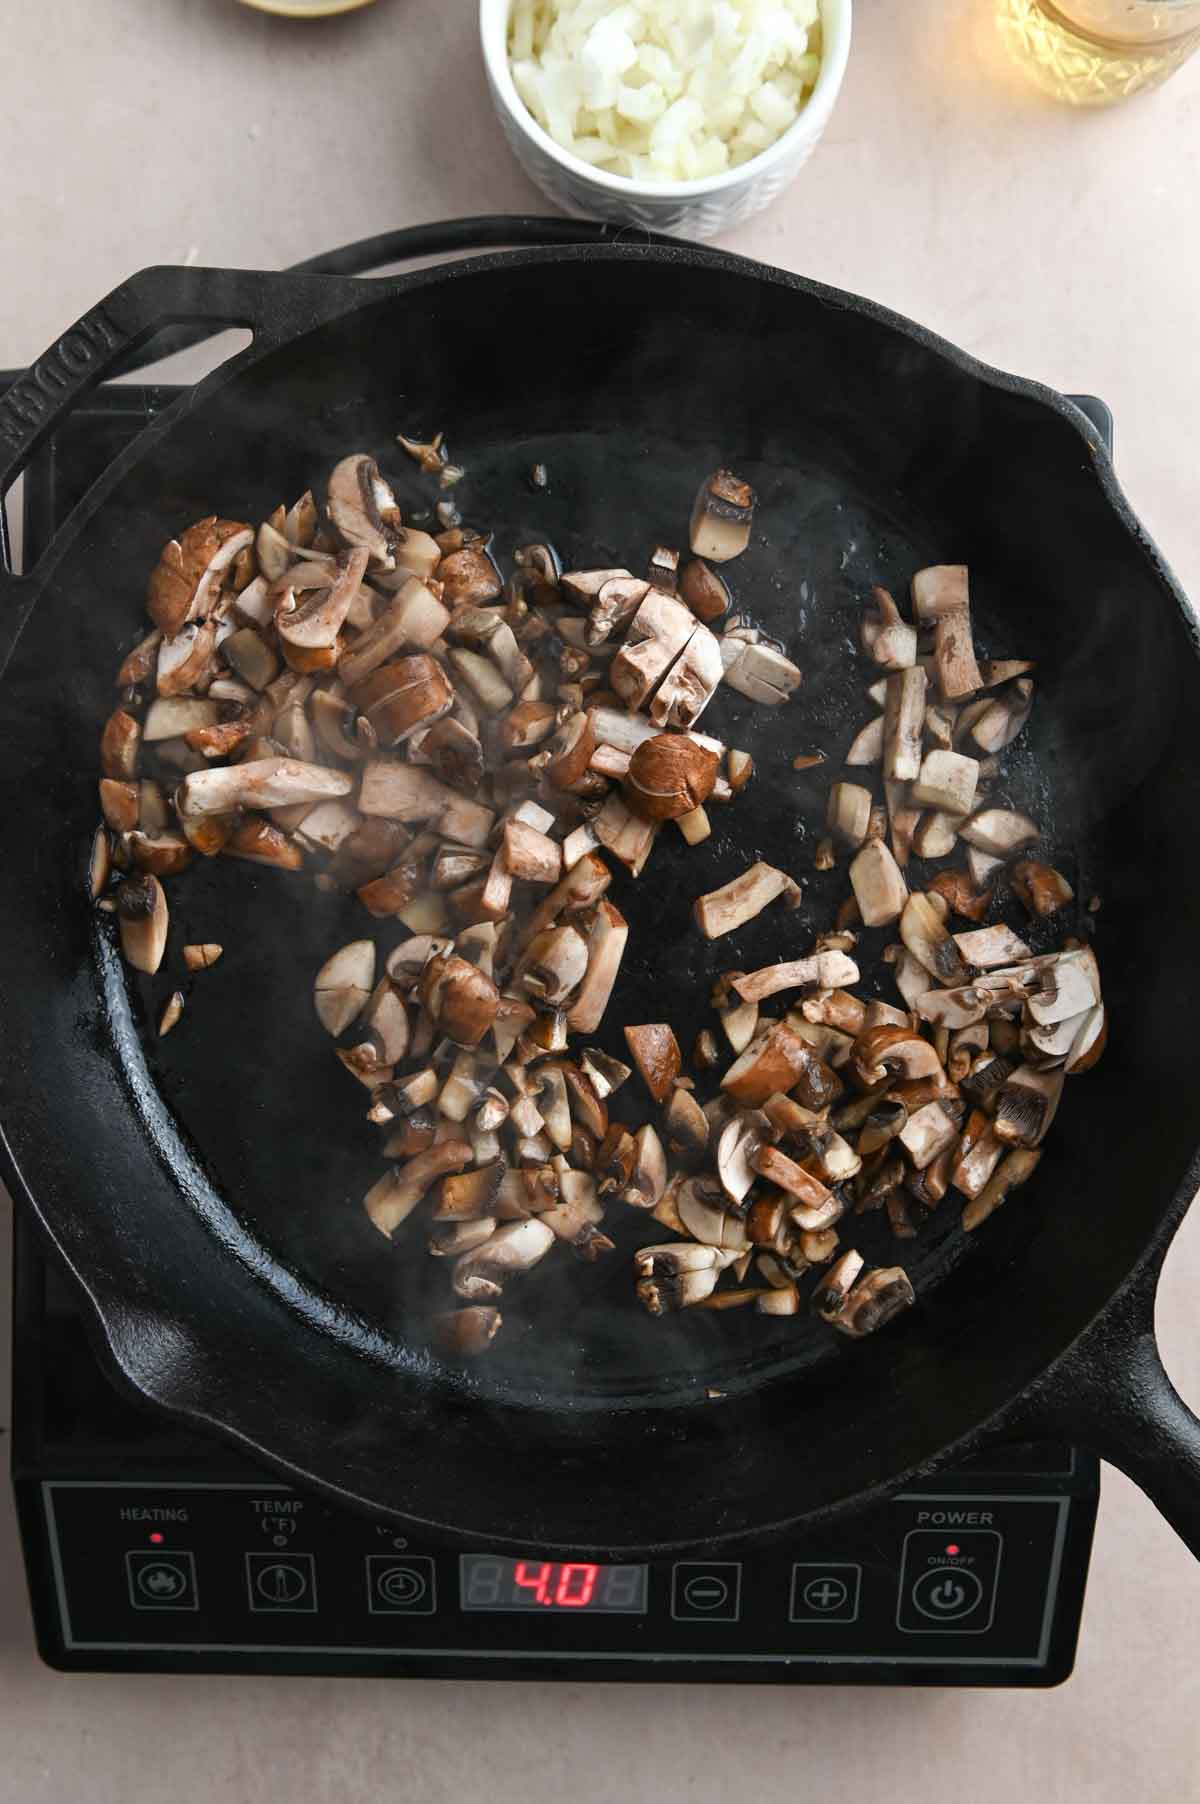 Chopped mushrooms sautéing in a cast iron pan.